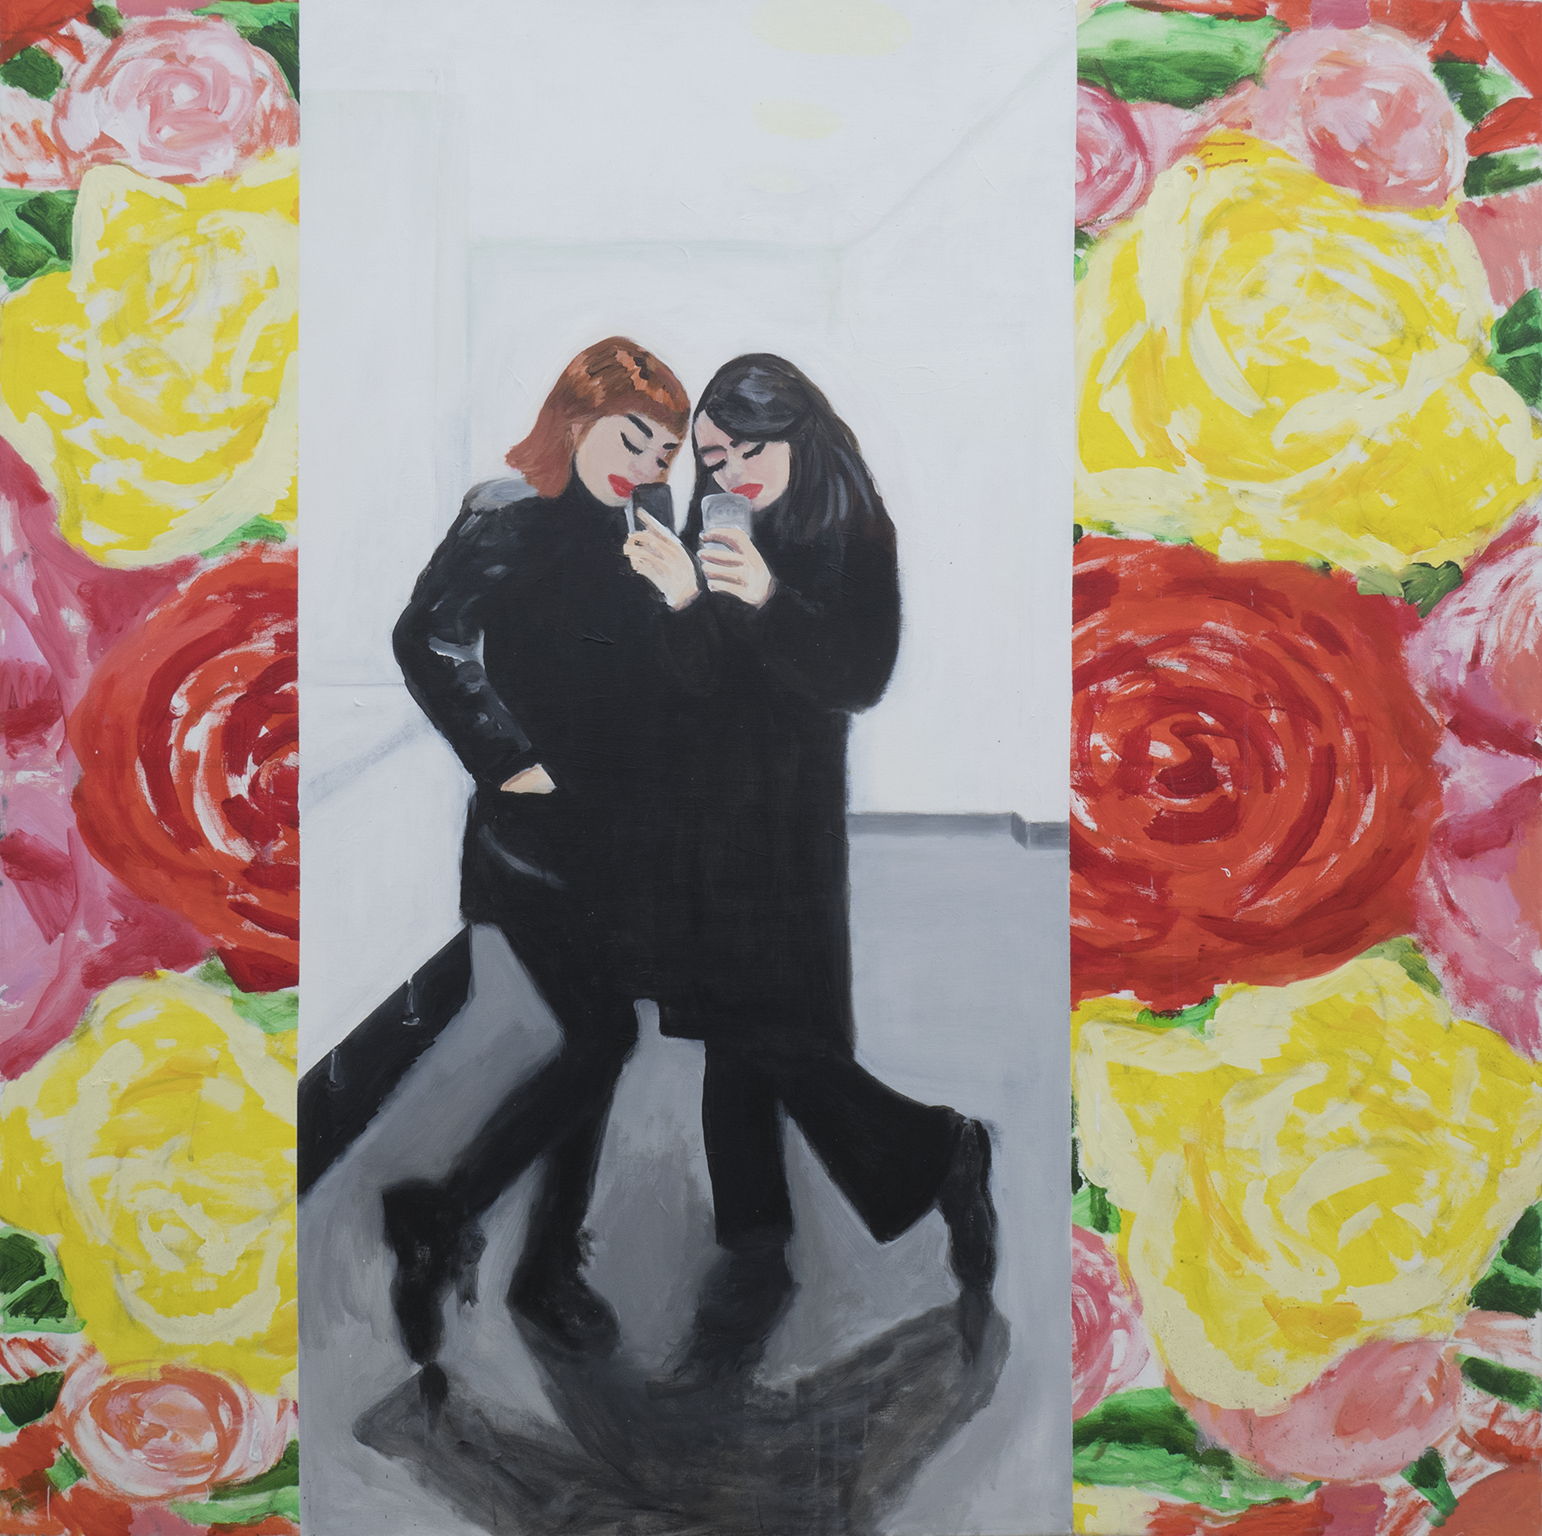 Marie Capaldi - I Pausen, acrylic on canvas, 150x150cm, 2018